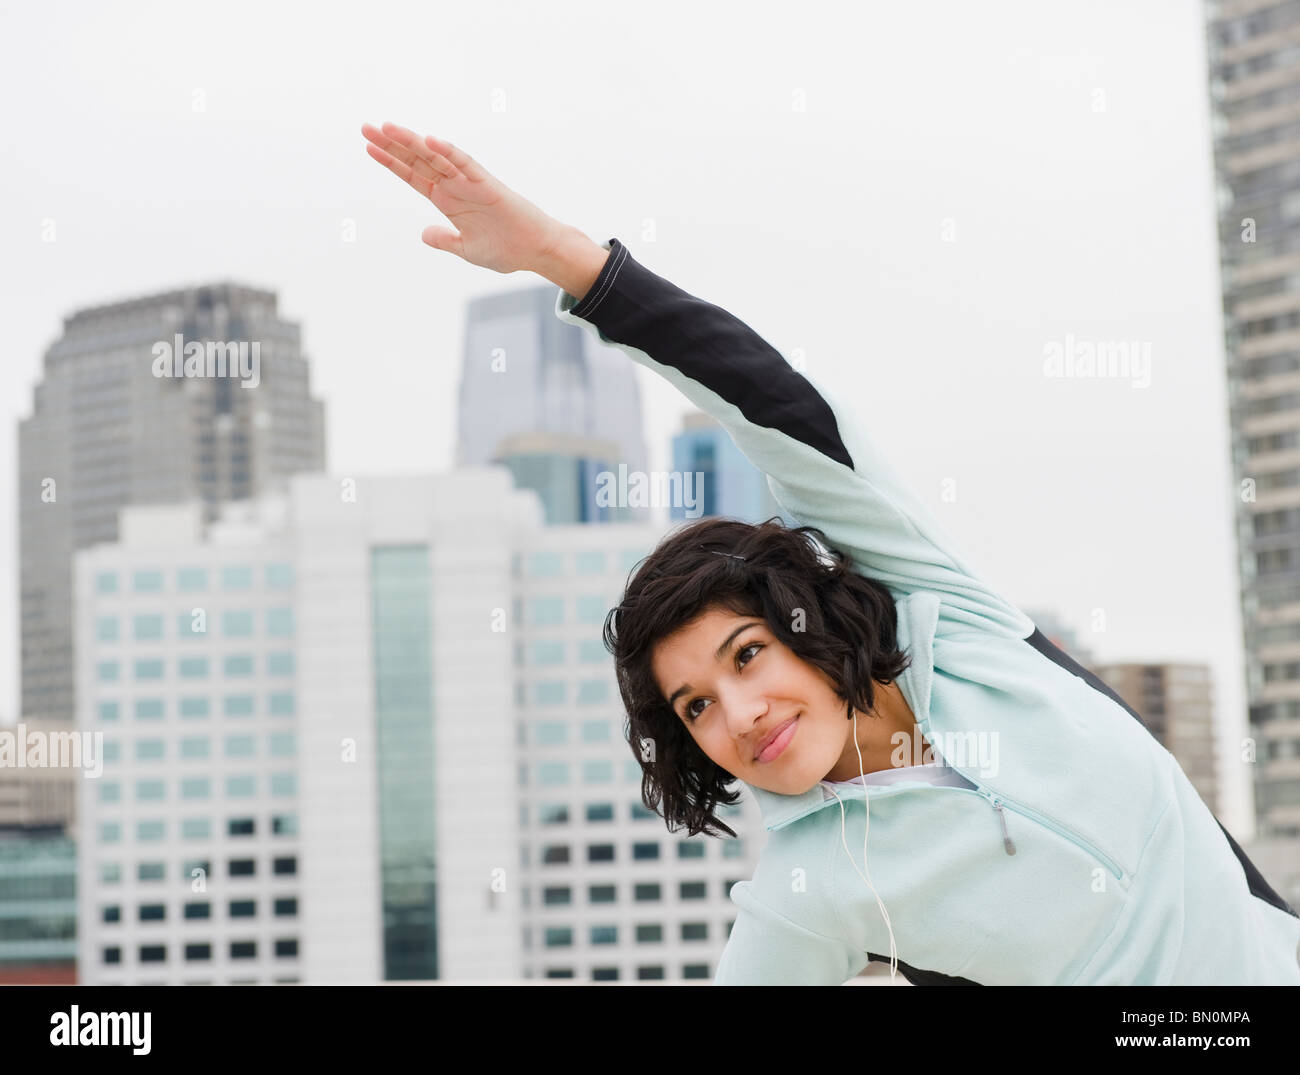 Hispanic woman stretching in city Stock Photo